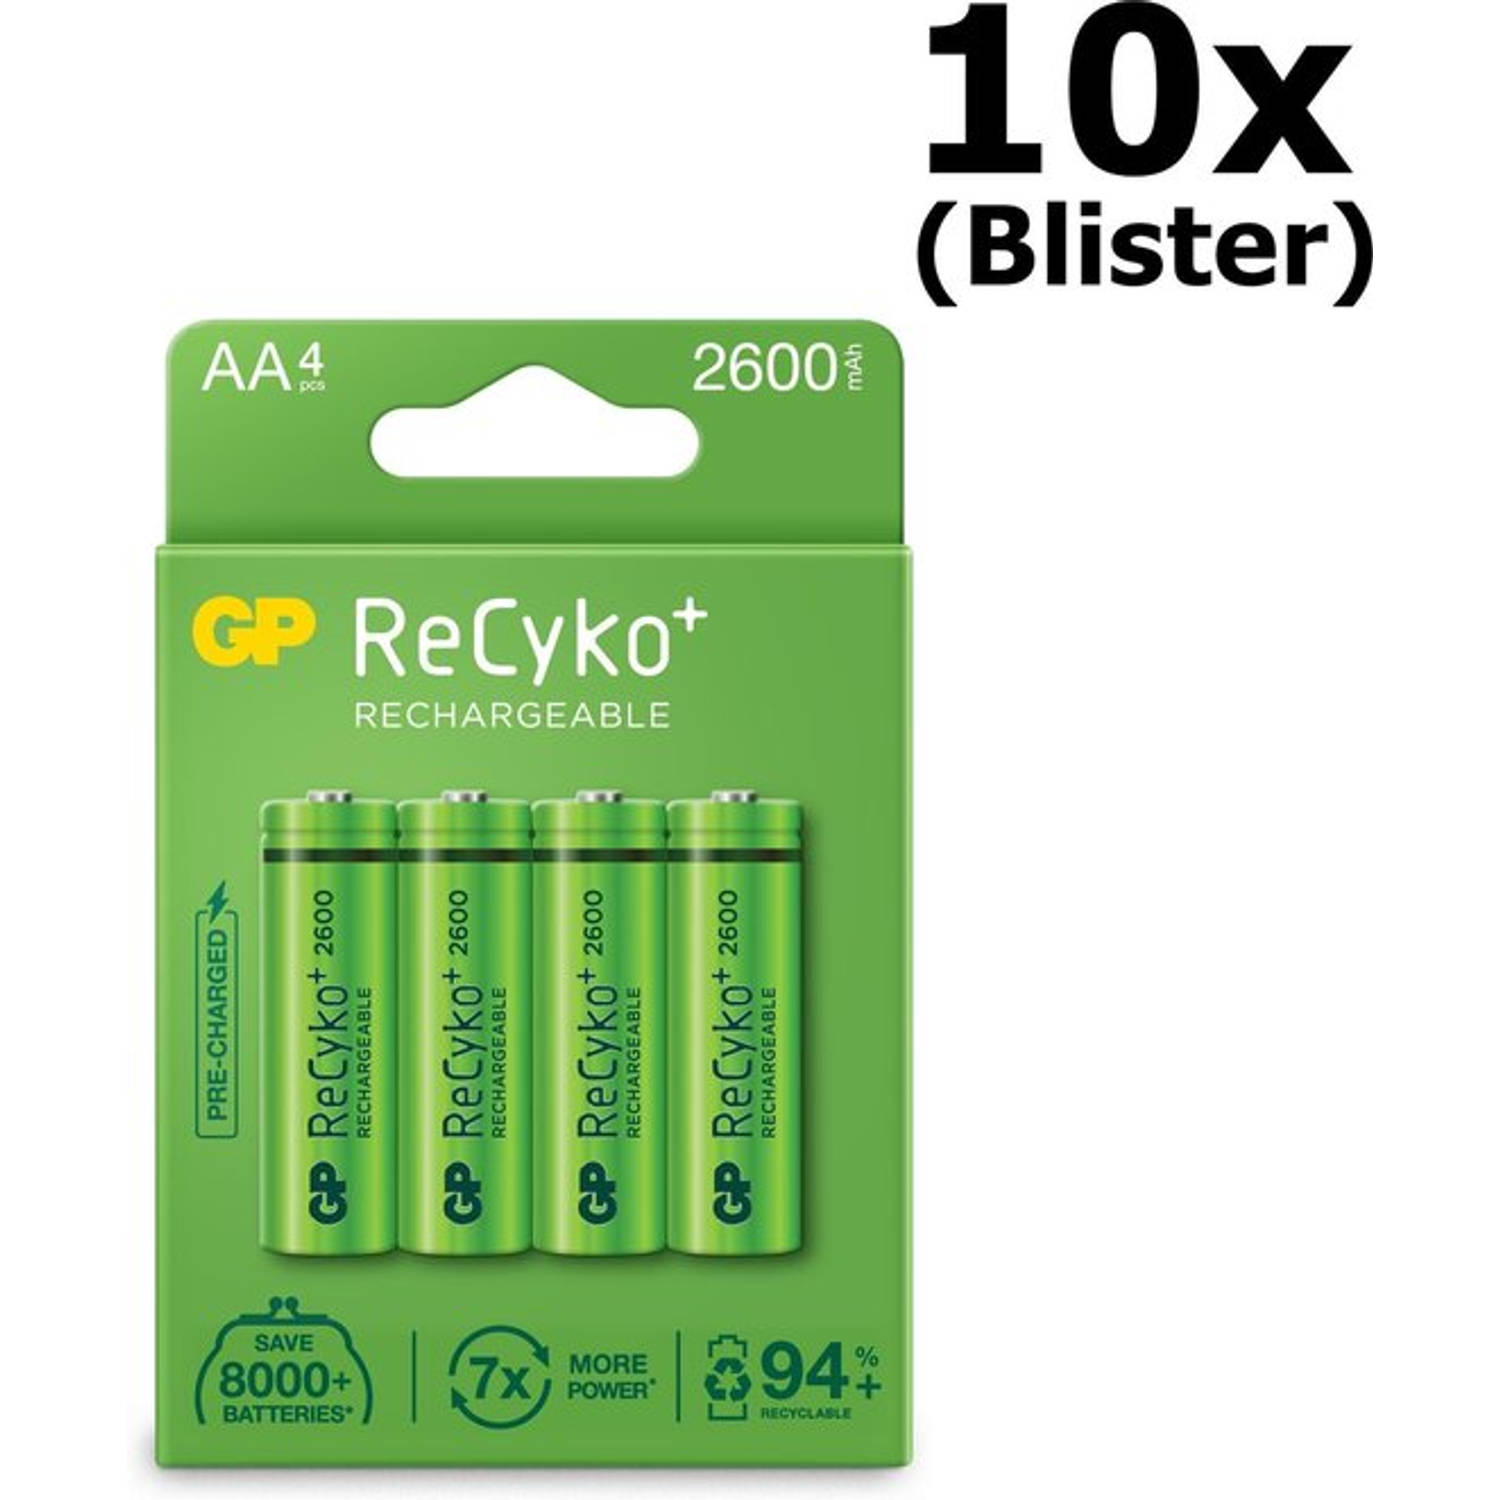 40 Stuks (10 Blisters a 4st) - GP Recyko+ 2700 Series AA/HR06 2600mah 1.2V NiMH Oplaadbare Batterijen